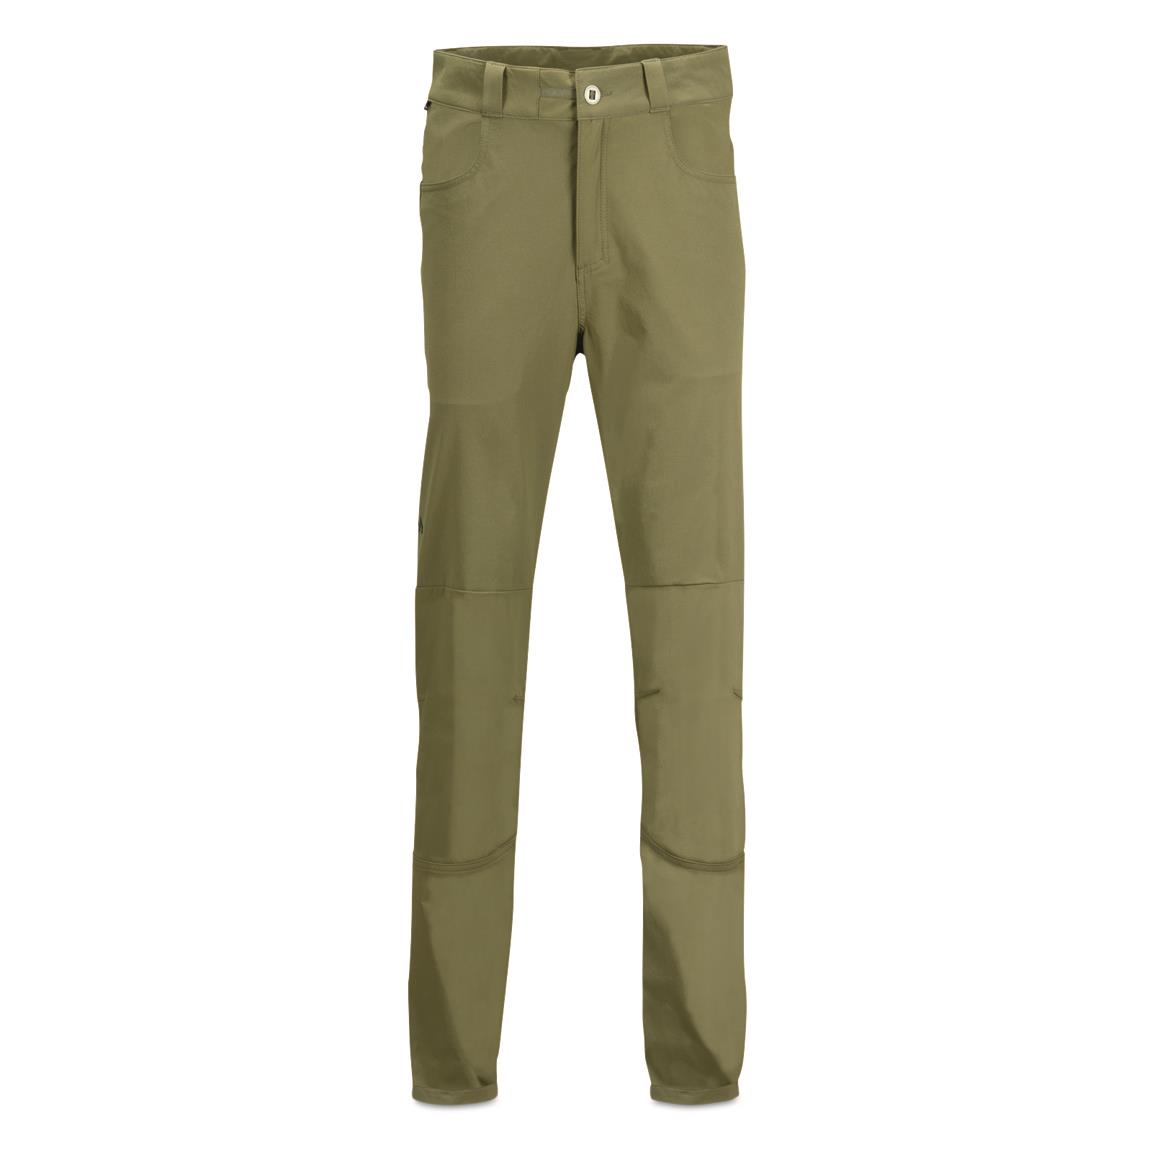 Browning Men's Dutton Hybrid Pants - 733214, Camo Pants at Sportsman's ...